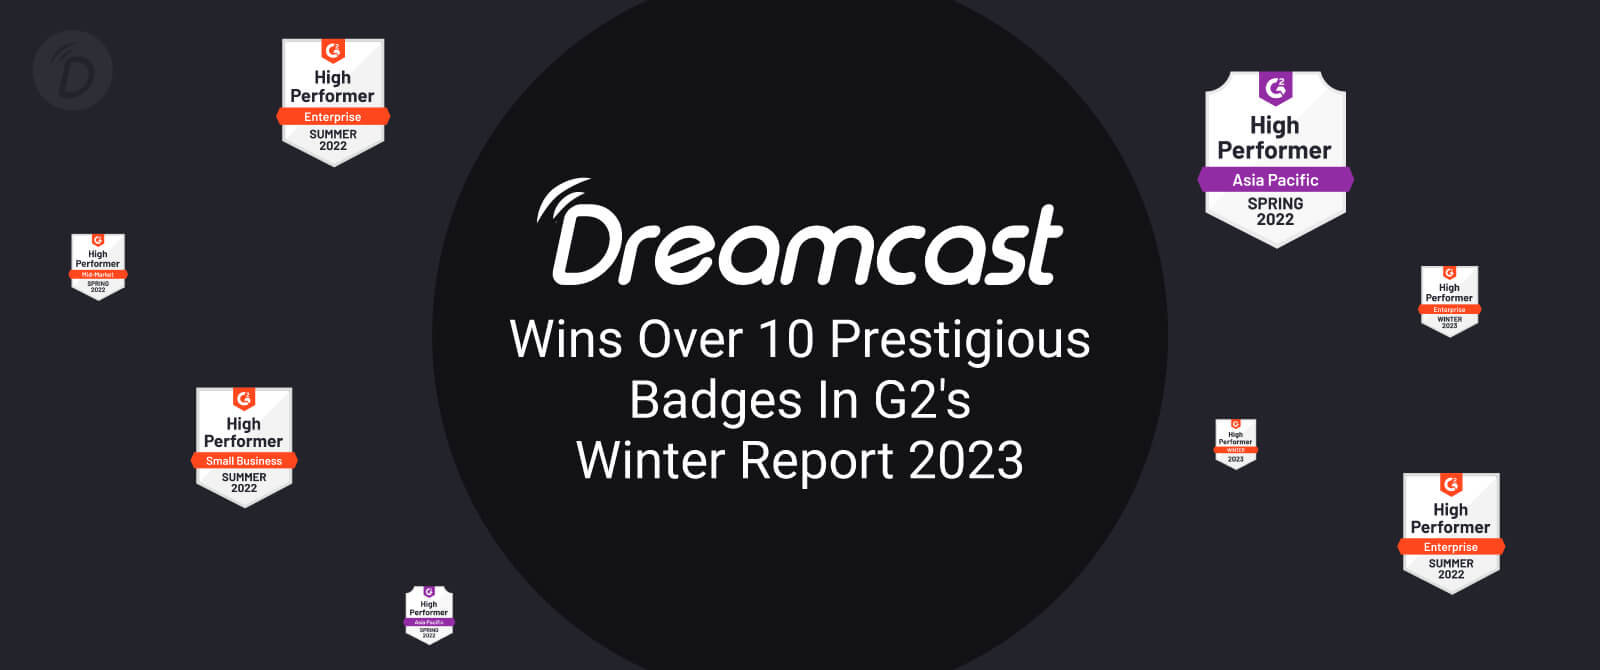 Dreamcast Wins Over 10 Prestigious Badges in G2’s Winter Report 2023